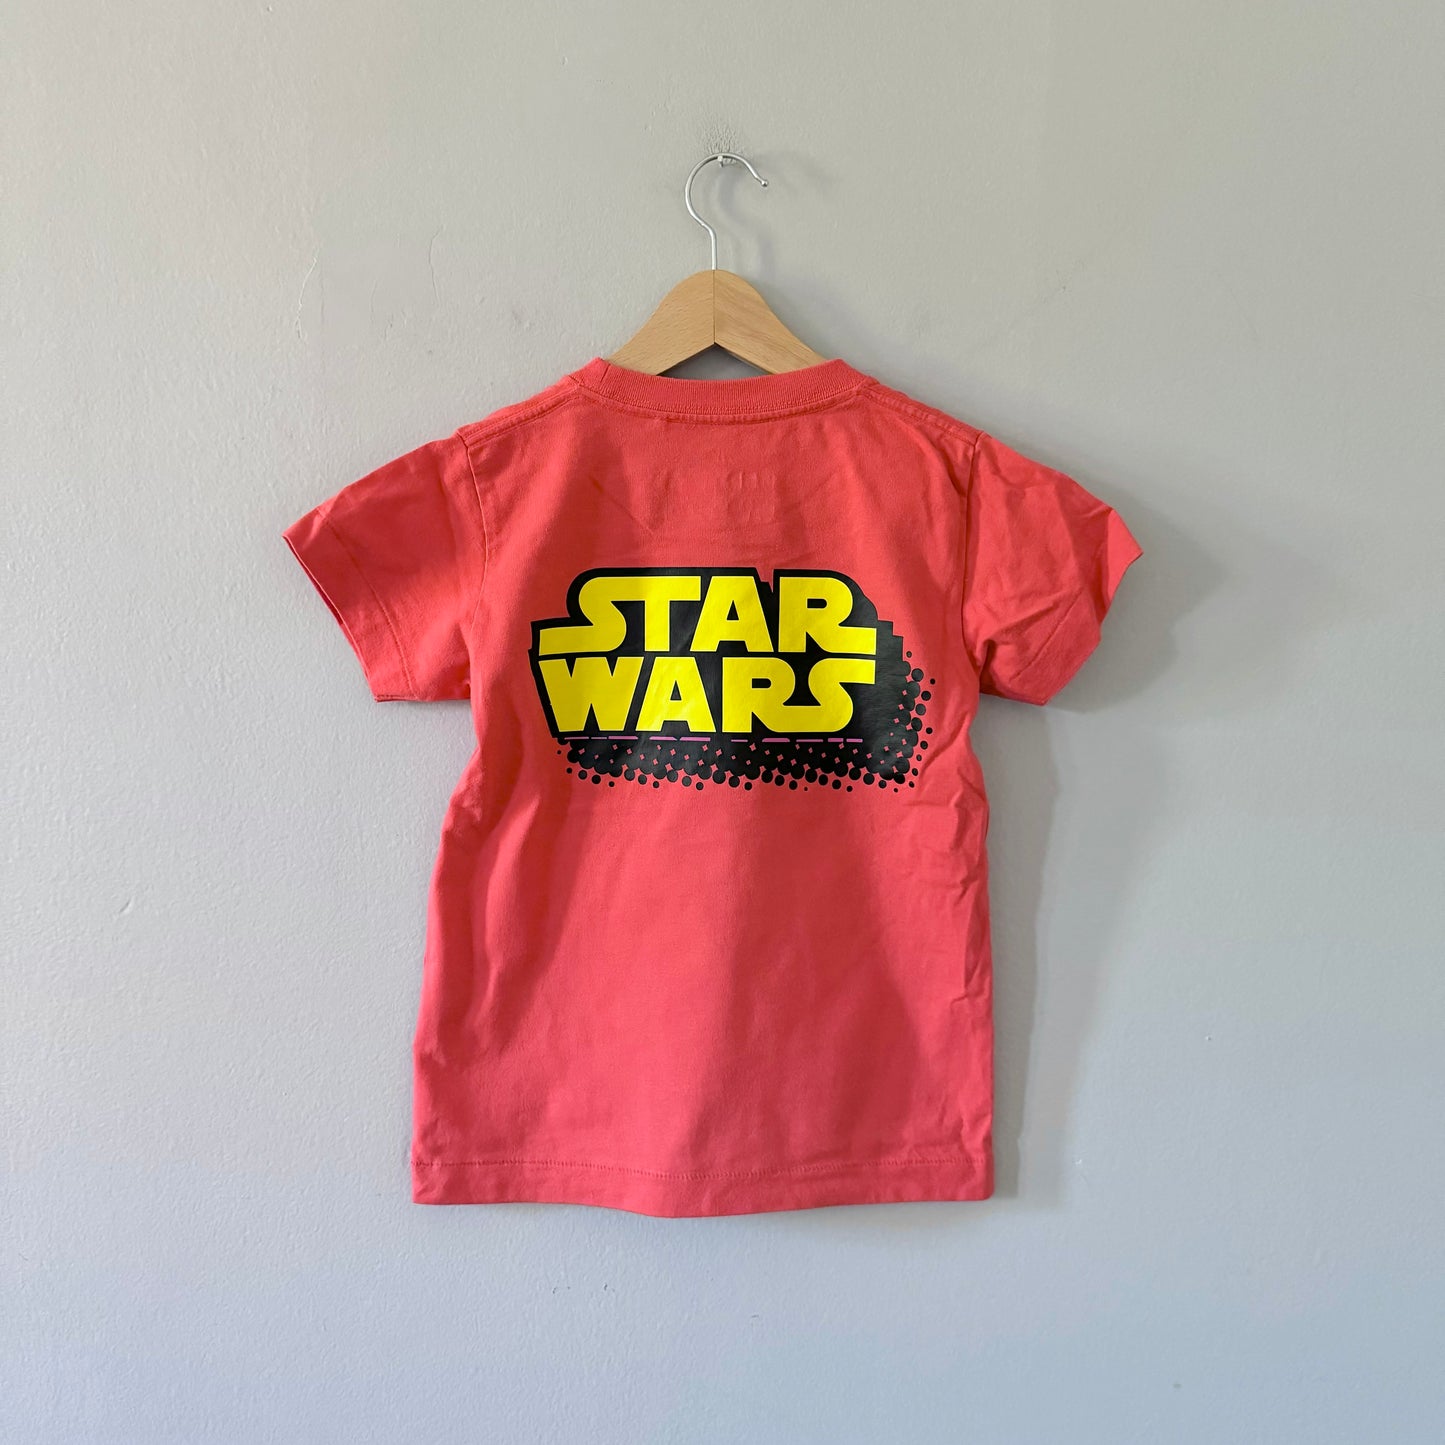 Uniqlo / Star Wars orange T-shirt / 4-5Y